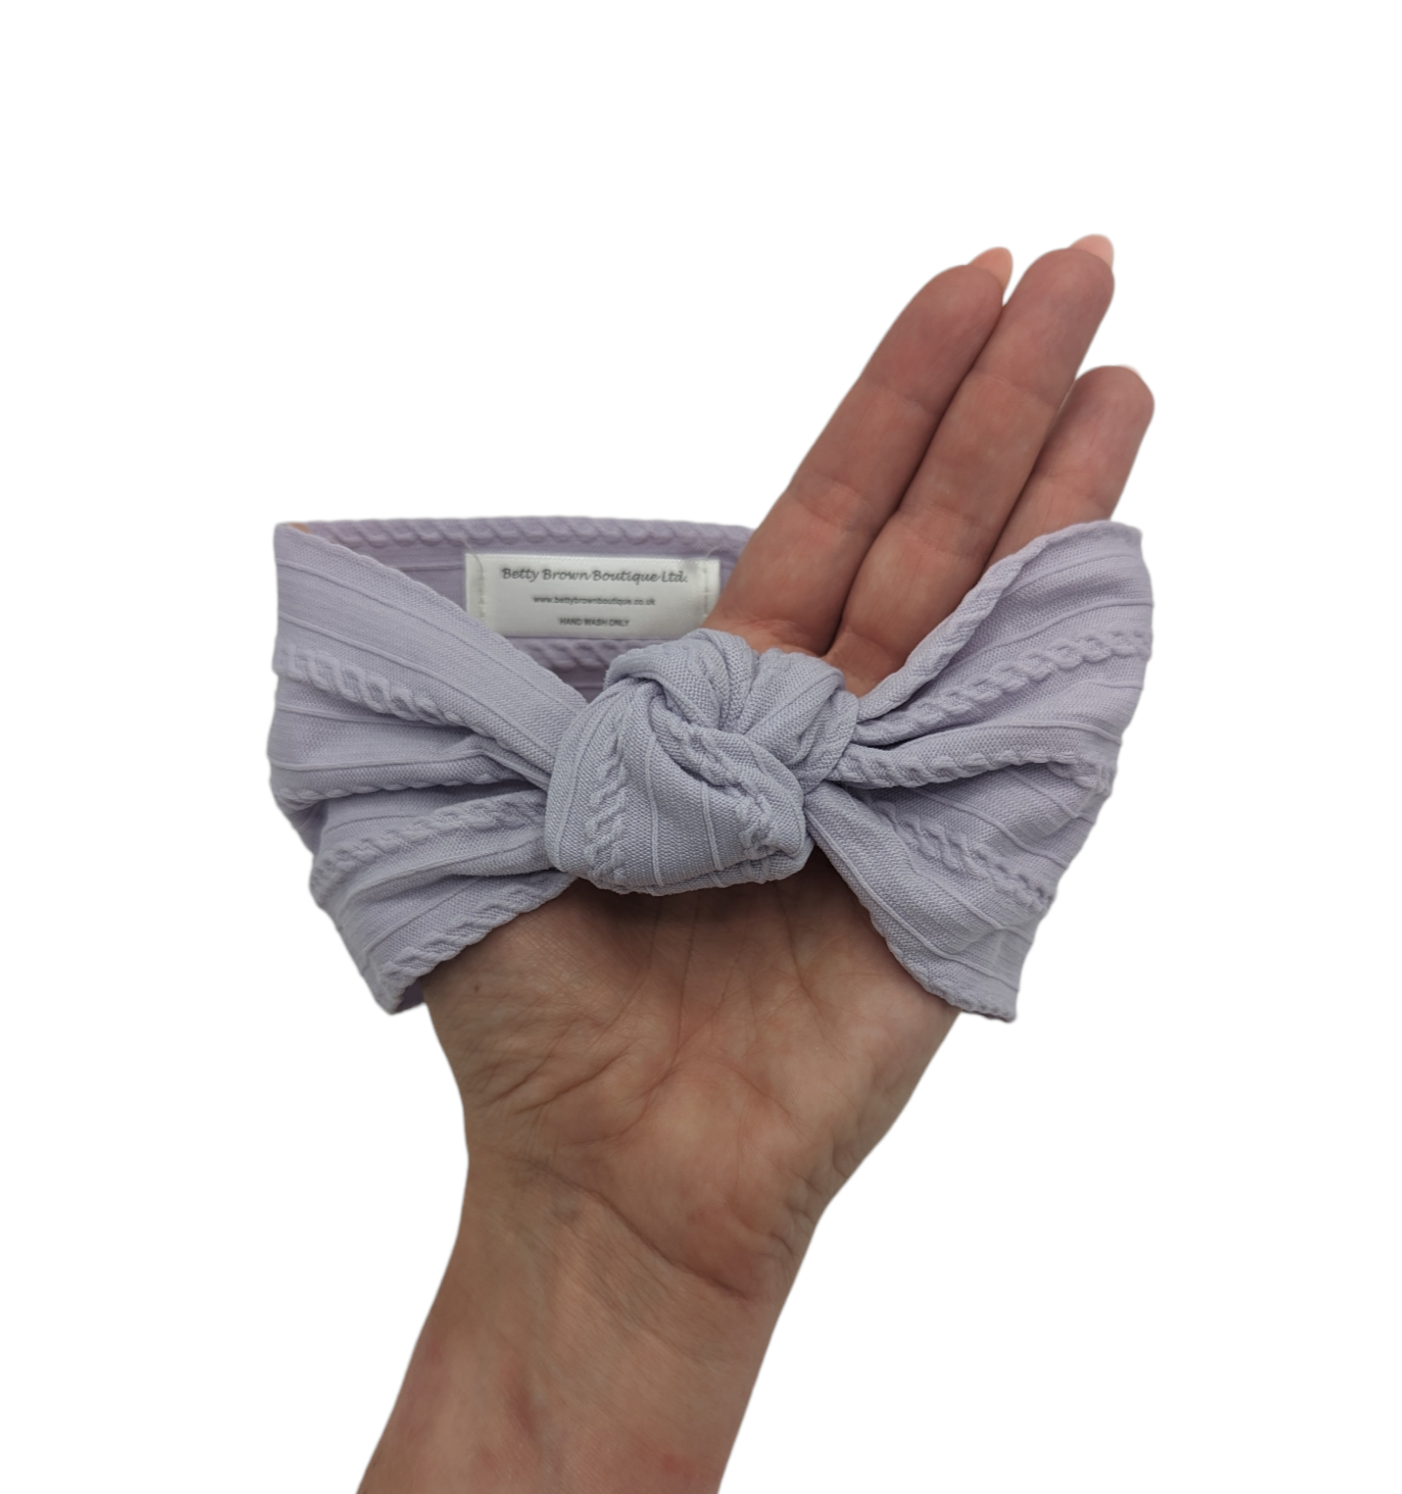 Pale Lilac Cable Knit Knot Headwrap - Betty Brown Boutique Ltd